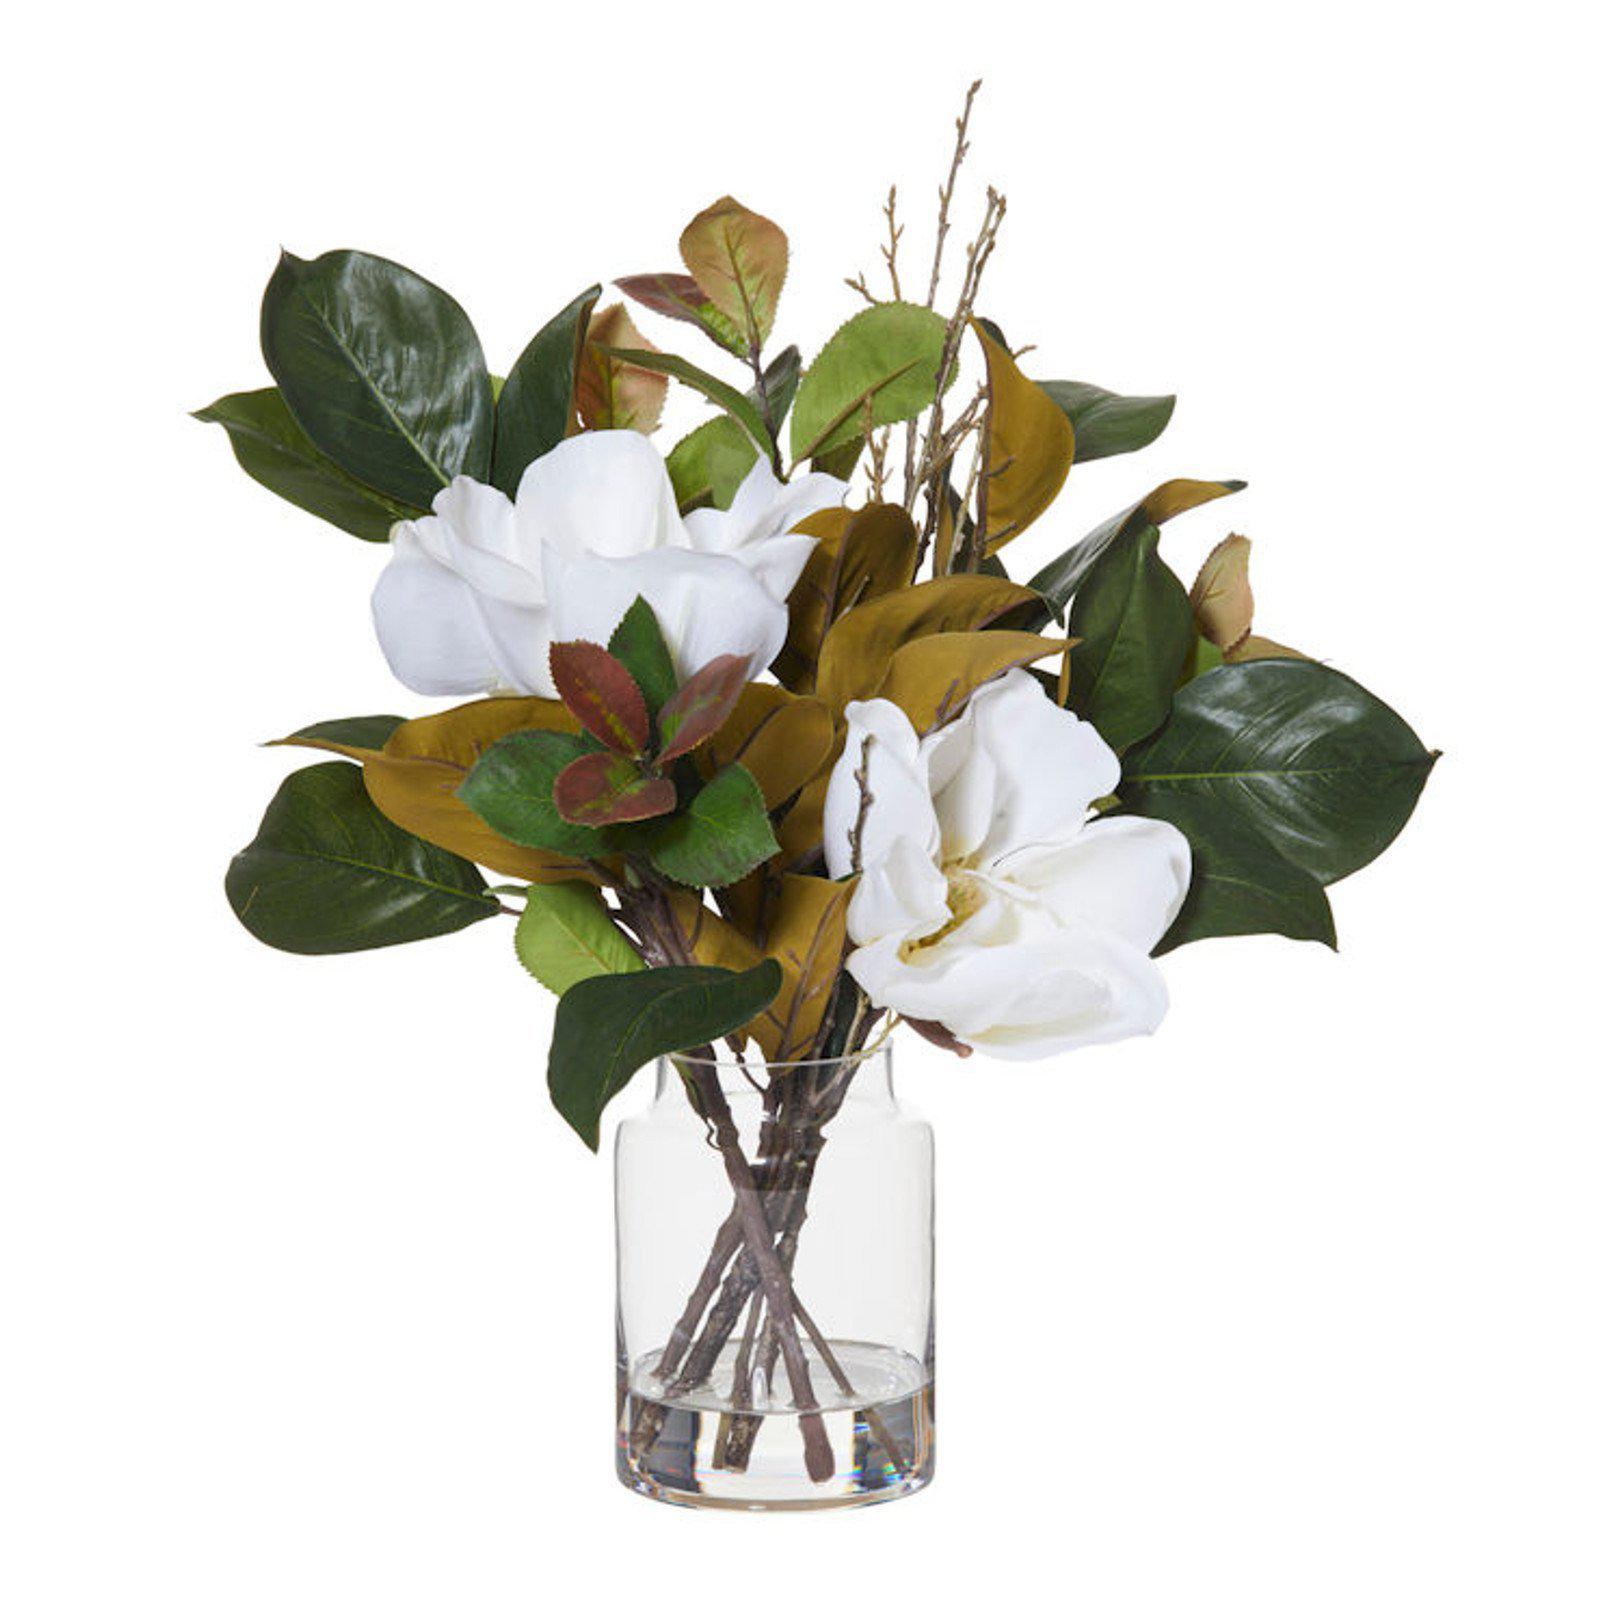 Magnolia Mix With Pail Vase- Artificial Flower / Floral Arrangement-artificial flowers and plants-Chef's Quality Cookware